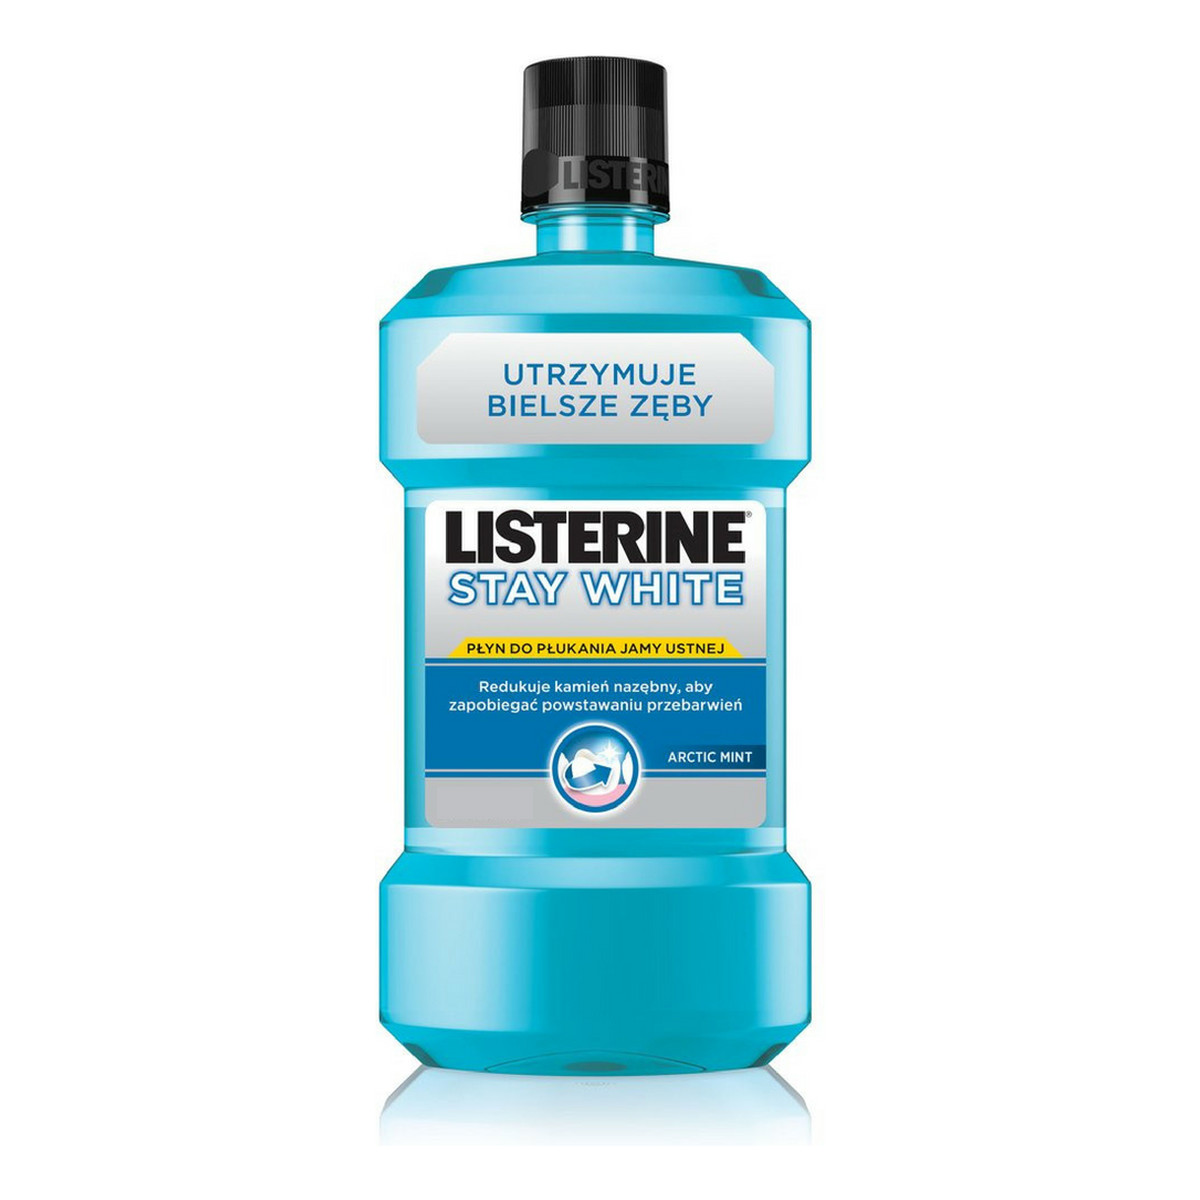 Listerine STAY WHITE Płyn do płukania jamy ustnej (3+3) 250ml